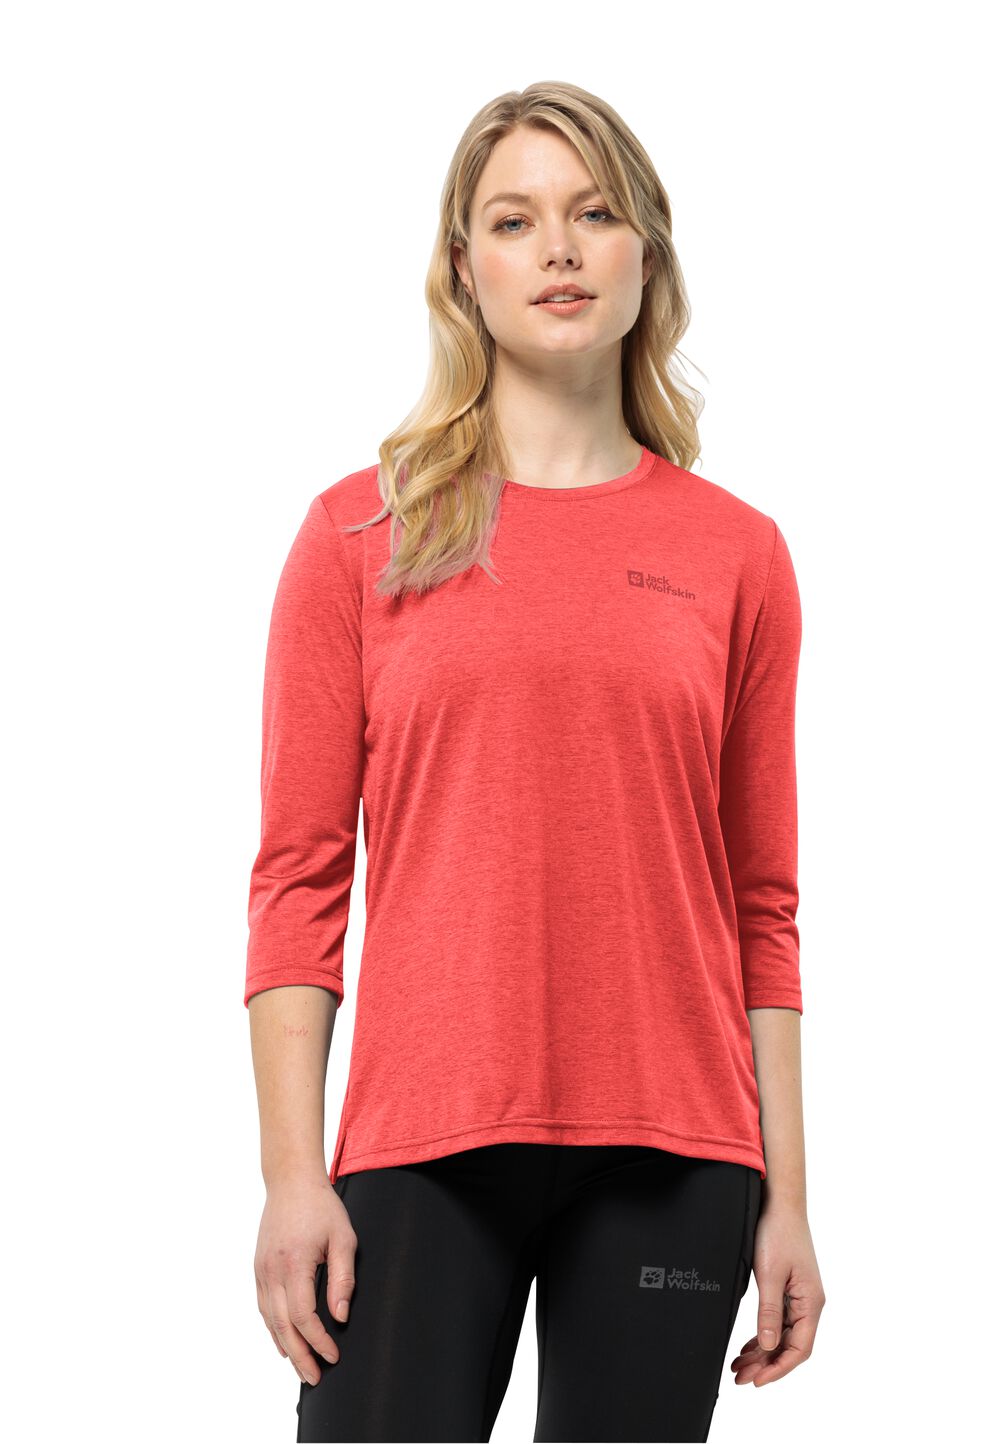 Jack Wolfskin Crosstrail 3 4 T-Shirt Women Functioneel shirt Dames M rood vibrant red